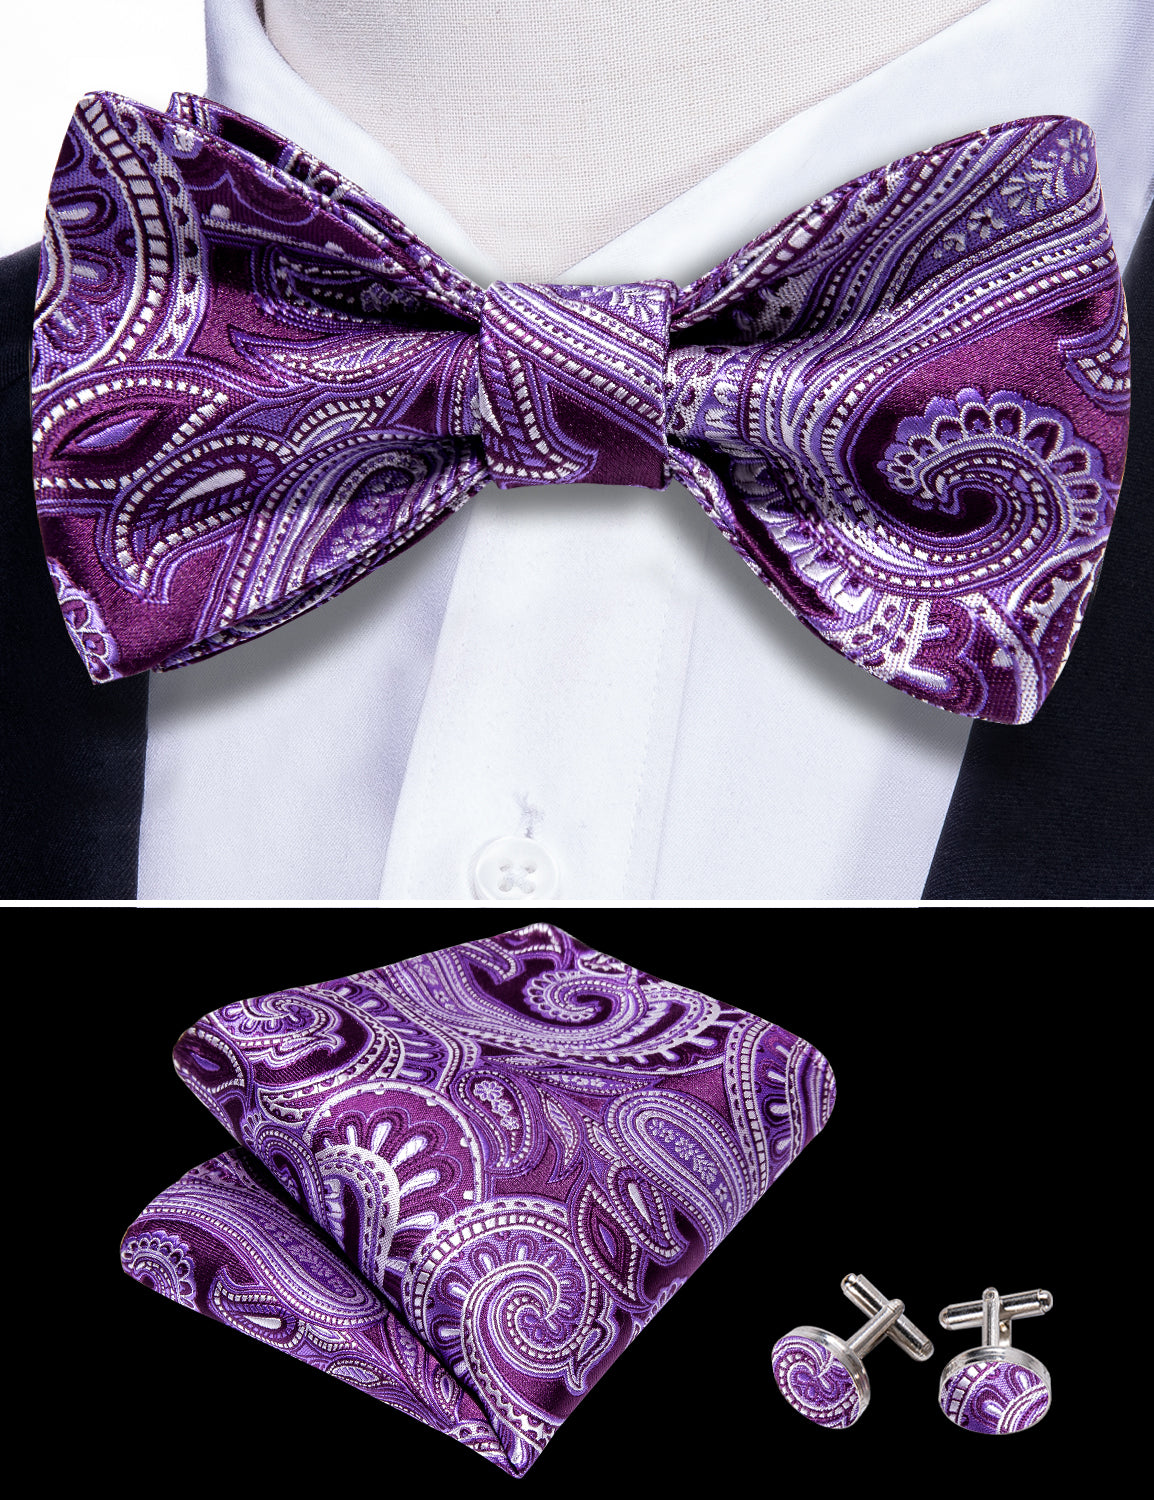 Barry.wang Purple Tie Paisley Self Tie Bow Tie Hanky Cufflinks Set Classic Hot